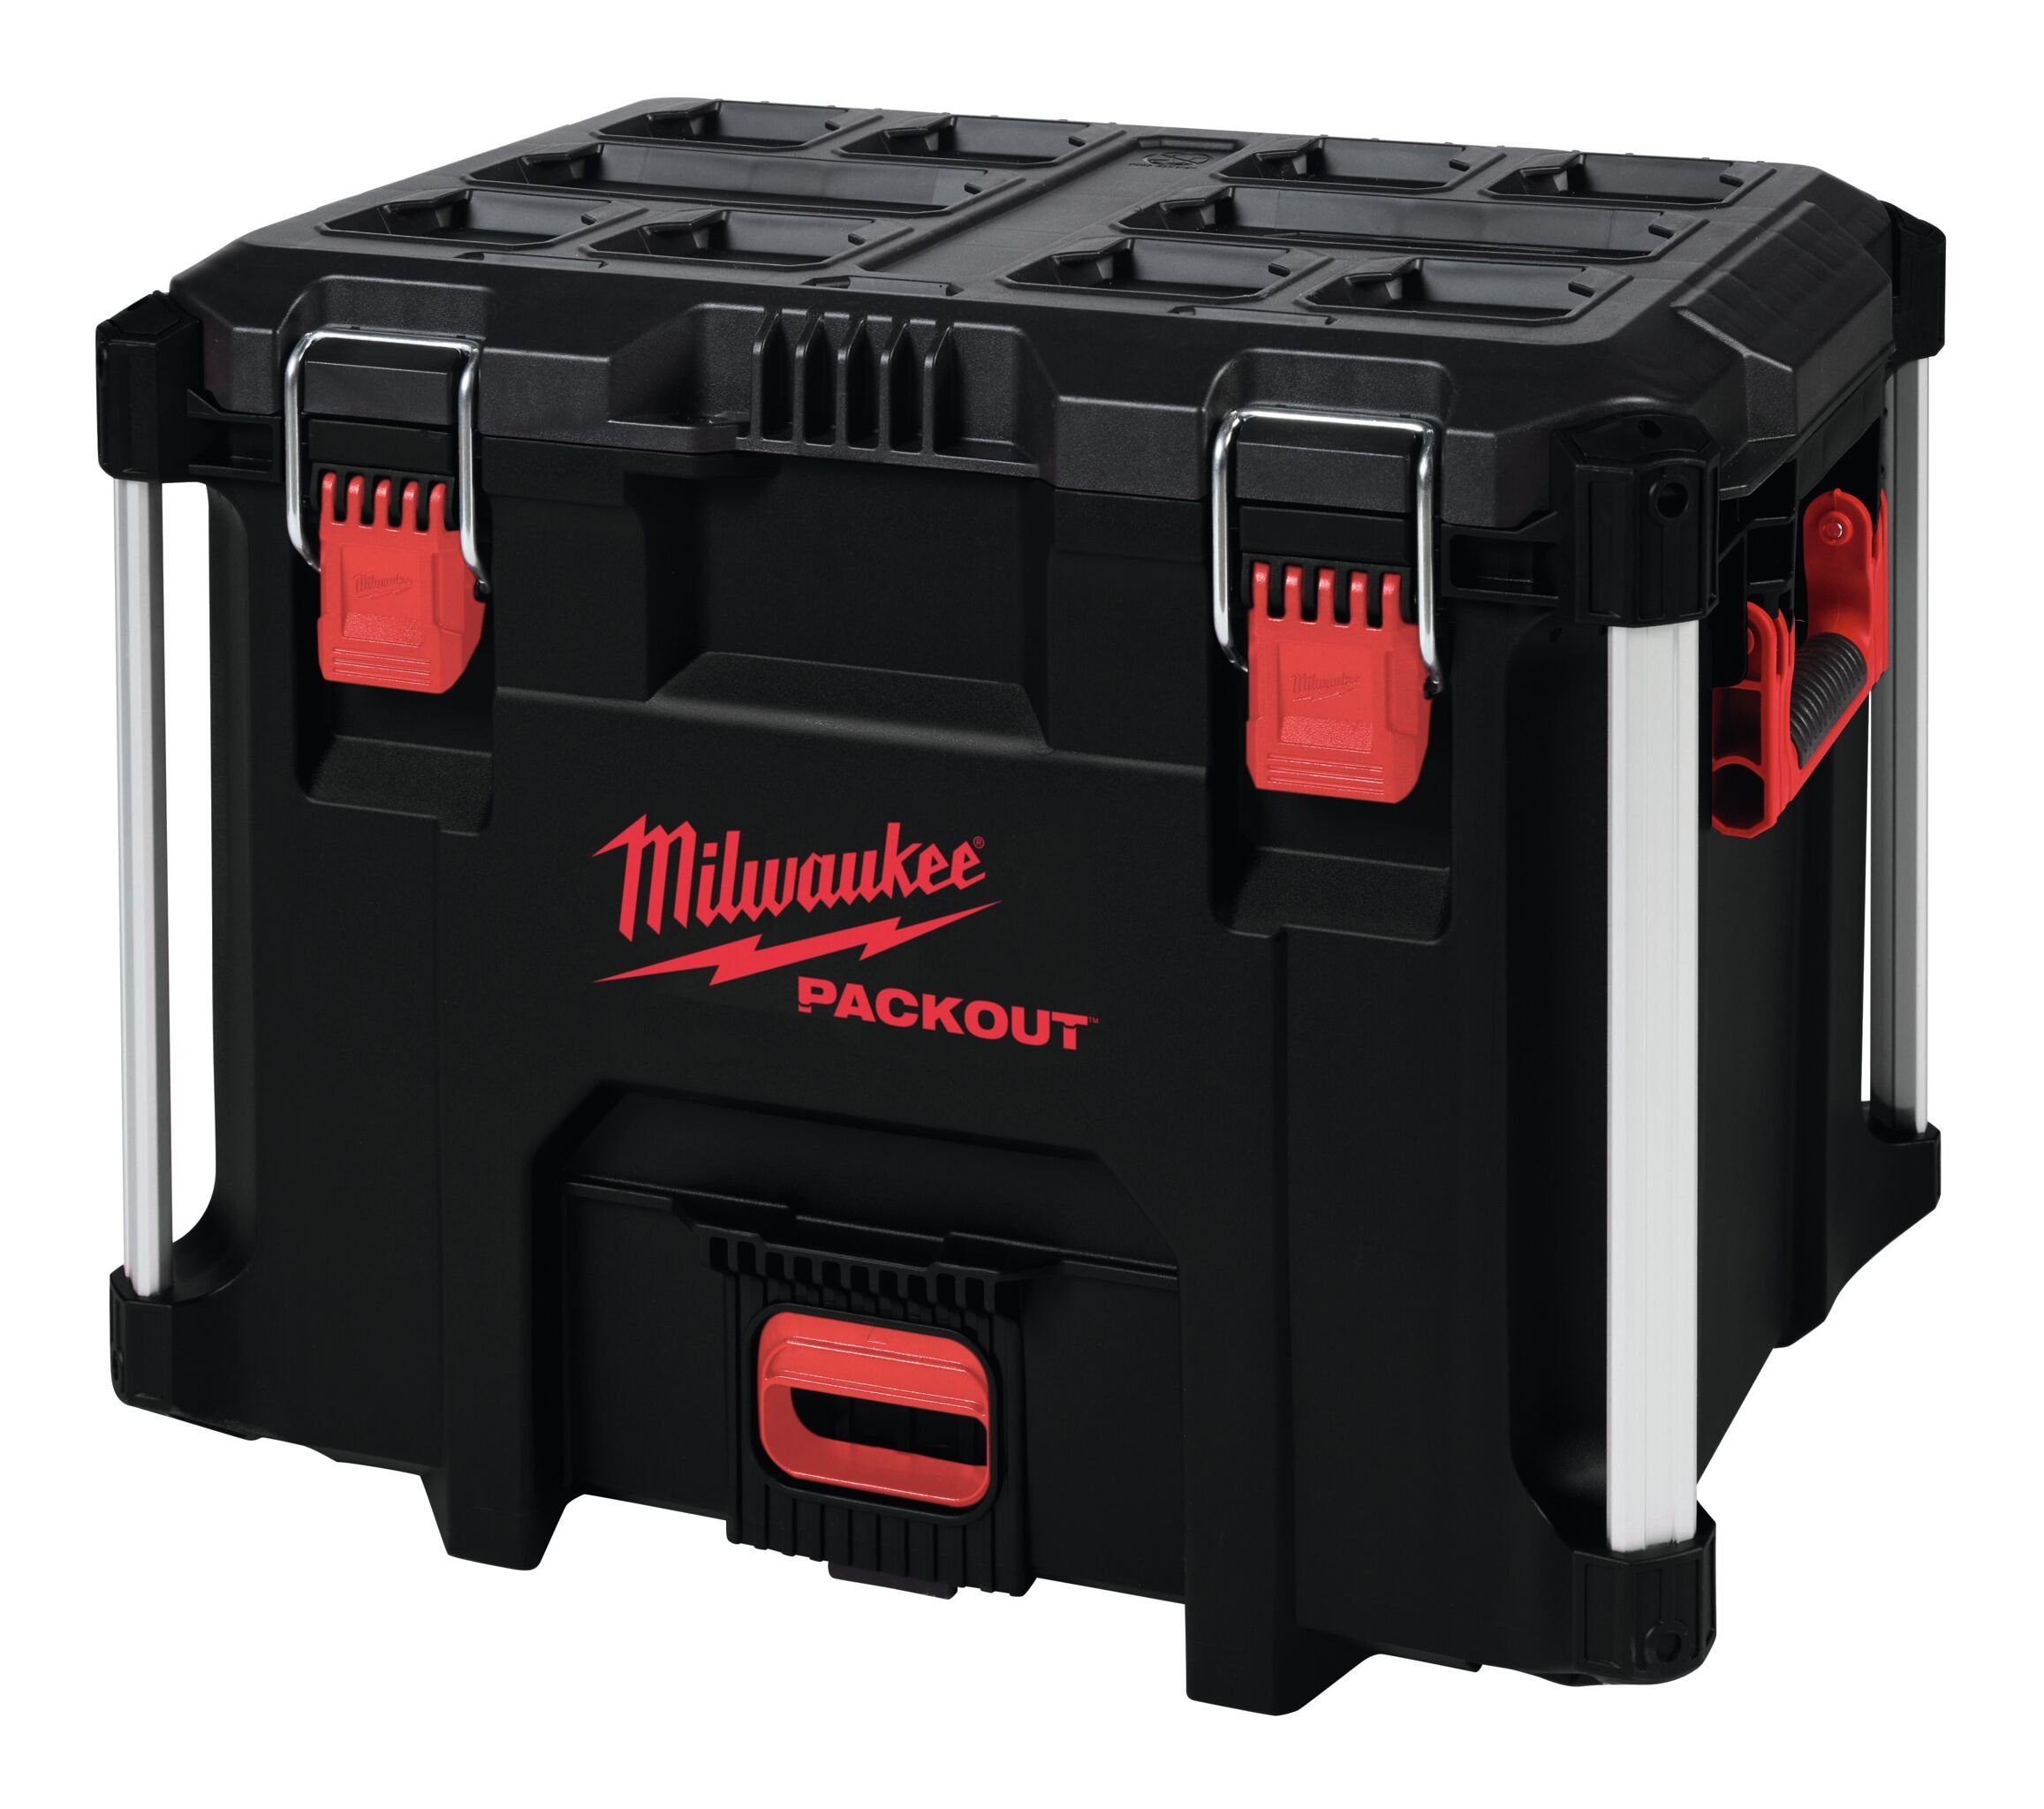 Milwaukee Koffer Werkzeugkoffer, XL Packout